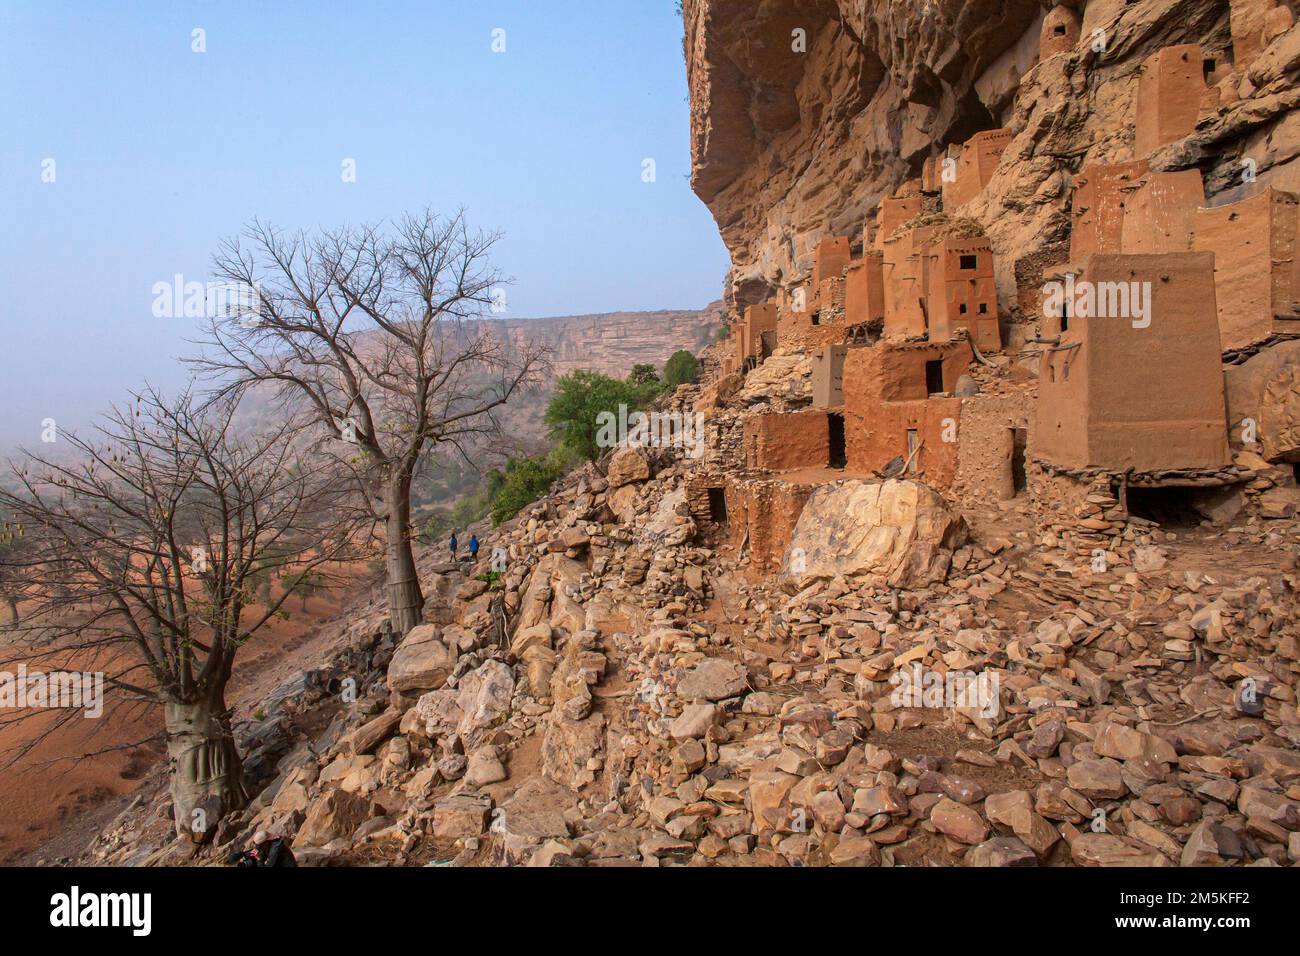 Dogon village in rock-face near Teli, Bandiagara Escarpment (Falaise de Bandiagara), Dogon land, Mali Stock Photo